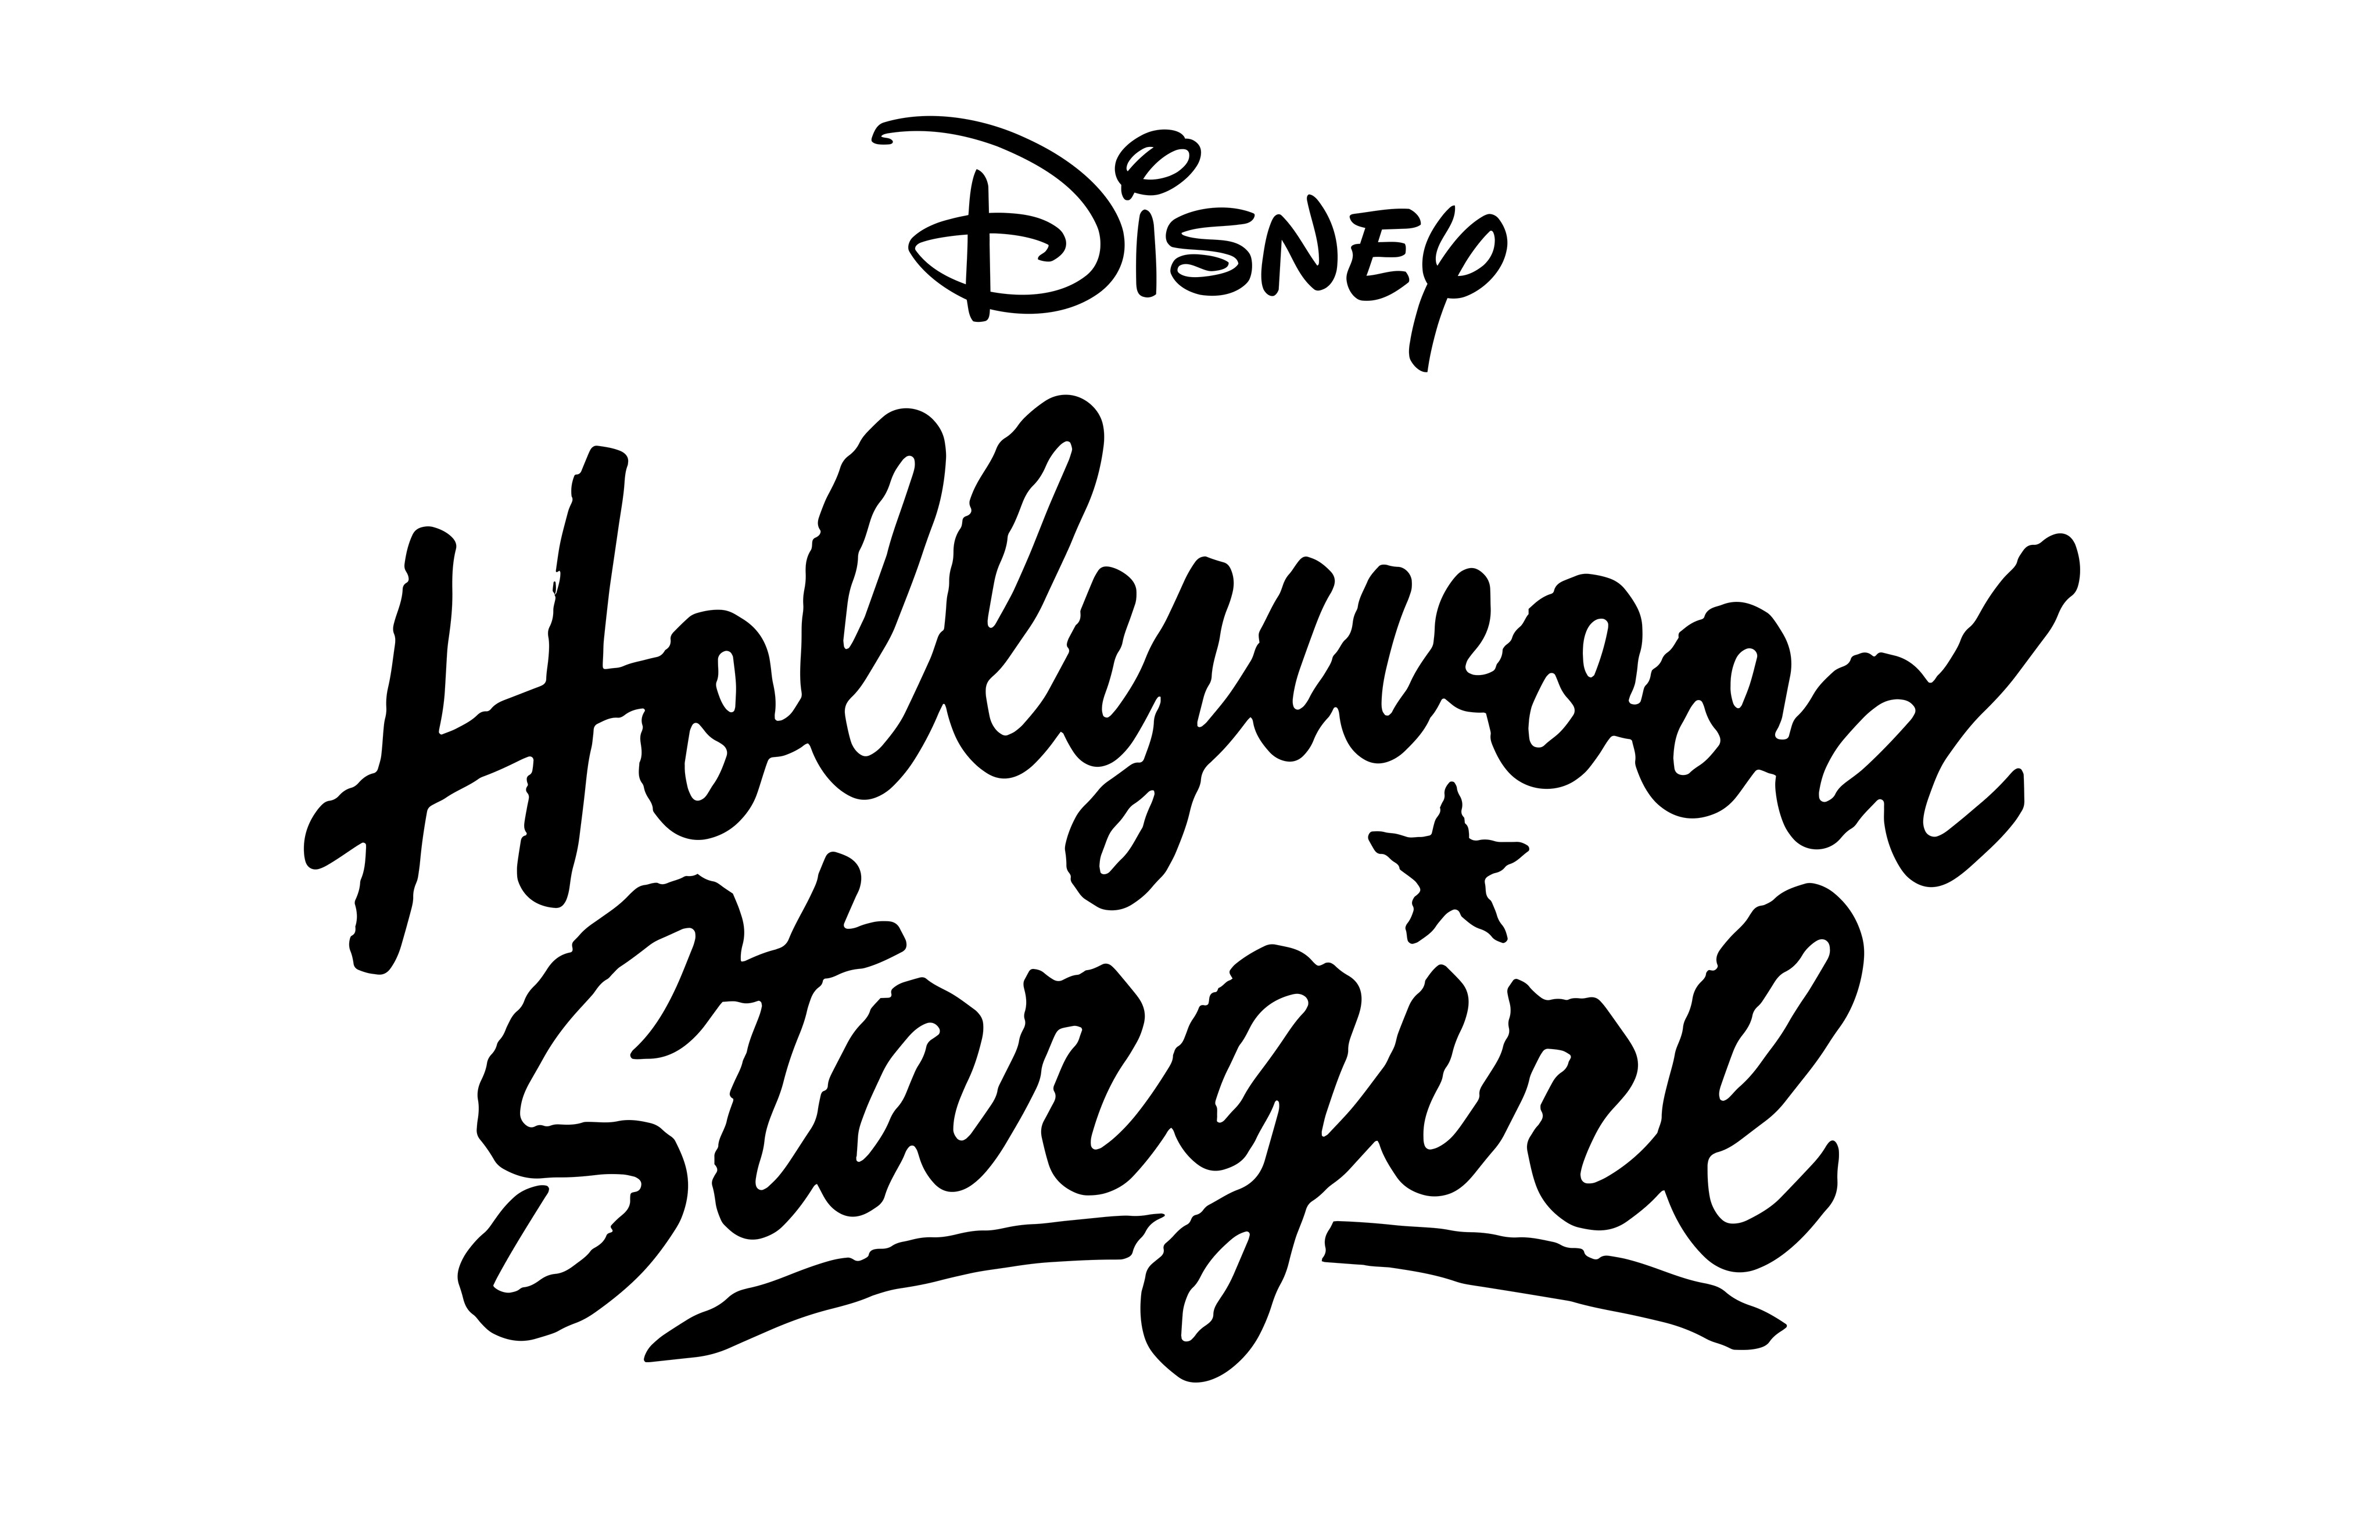 File:Disney's Hollywood Studios logo 2019.svg - Wikipedia